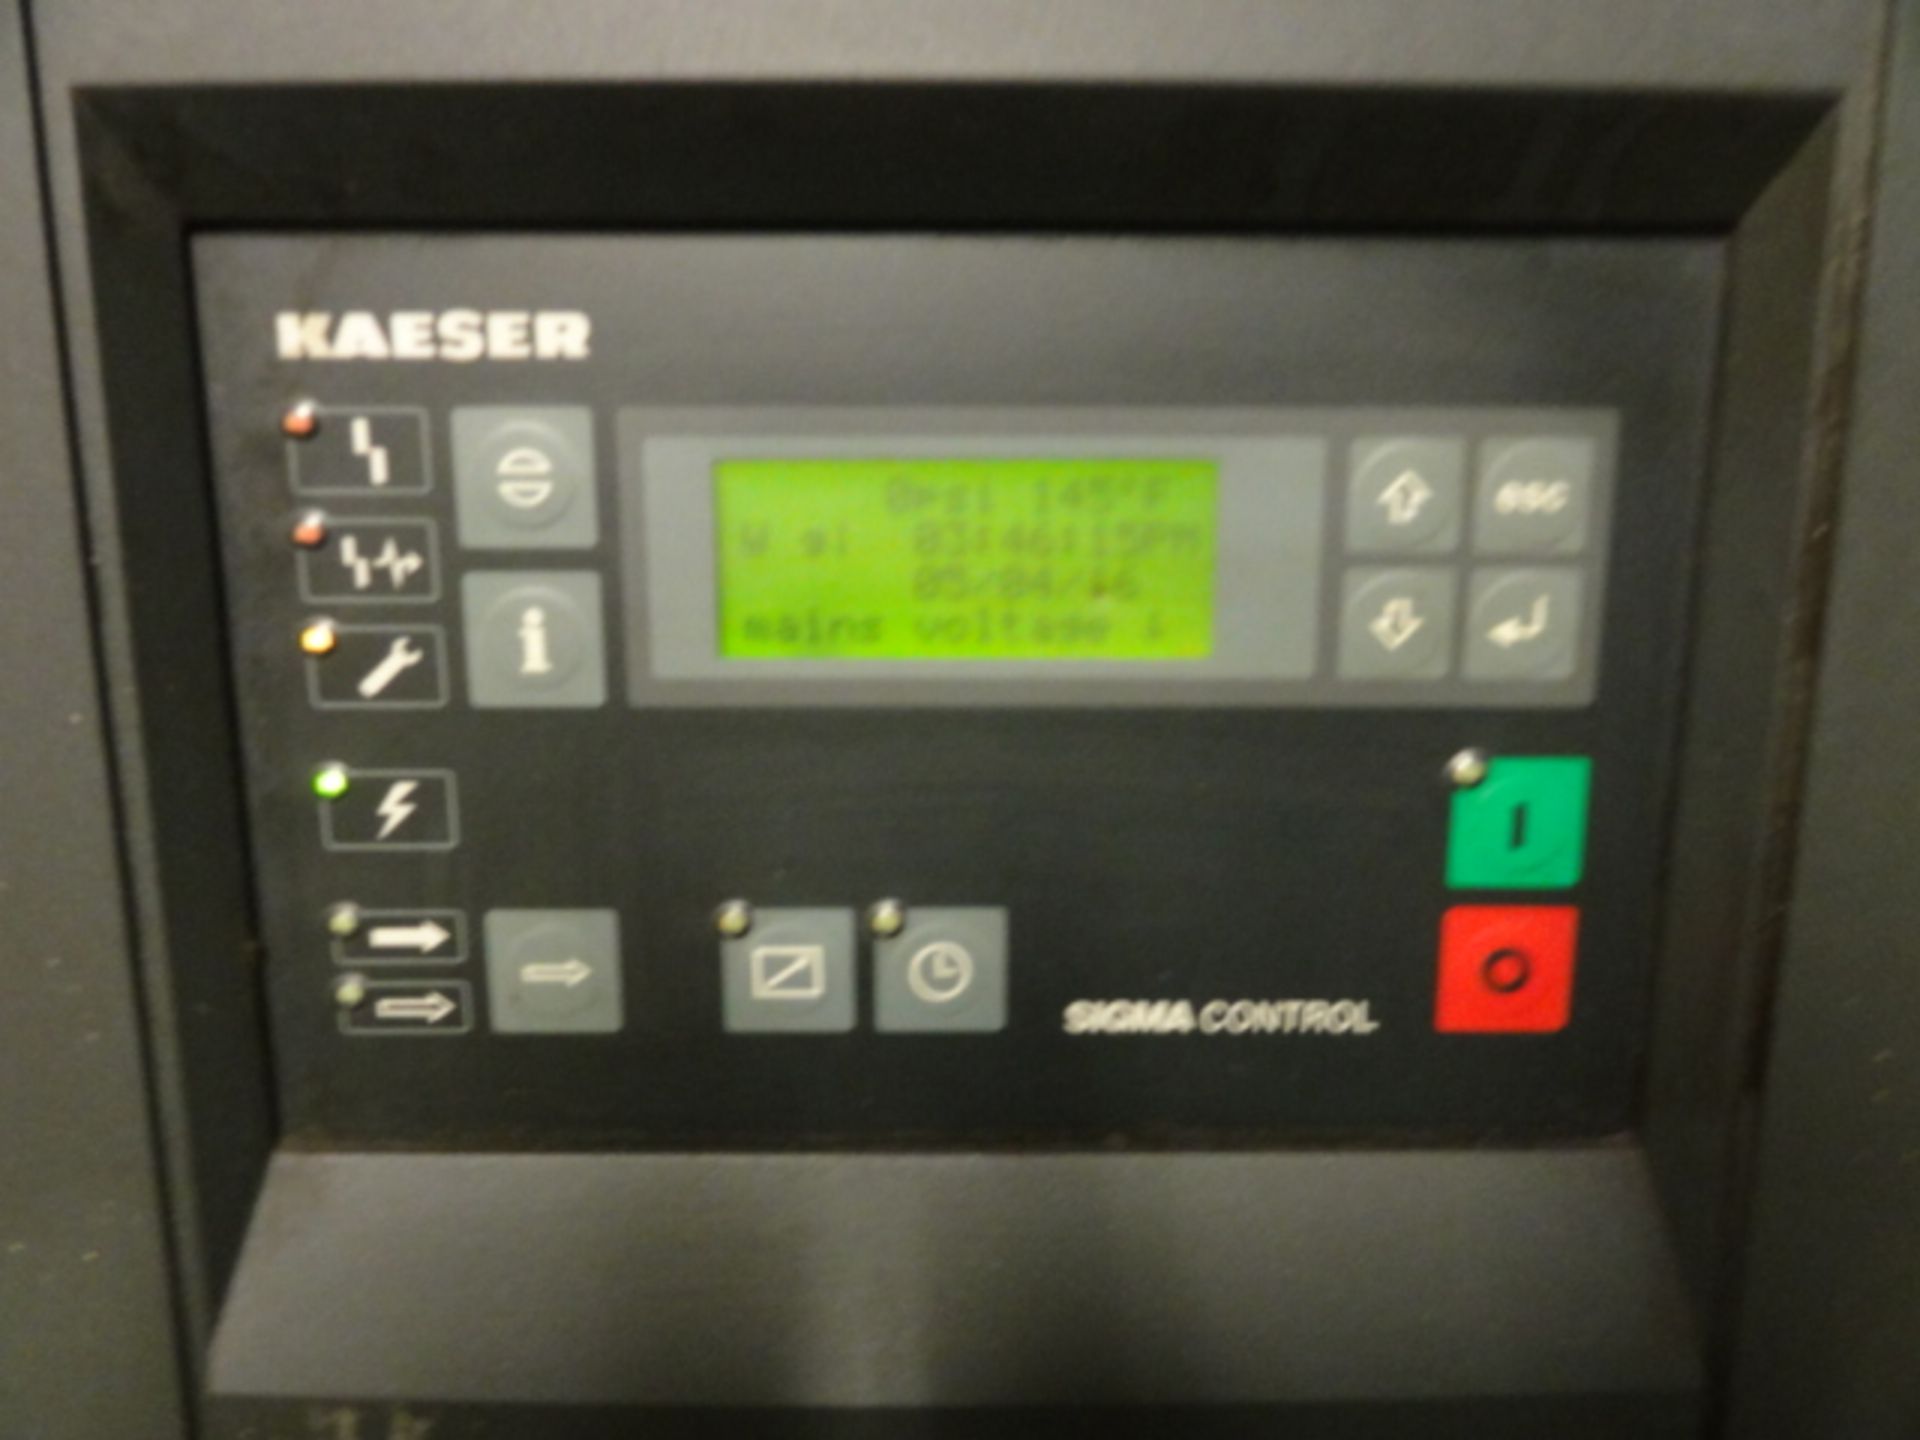 Kaeser Model CS91 75-HP Rotary Screw Air Compressor, 125 PSIG, Sigma Controls, 3-Phase, 60Htz, 460V, - Image 2 of 3